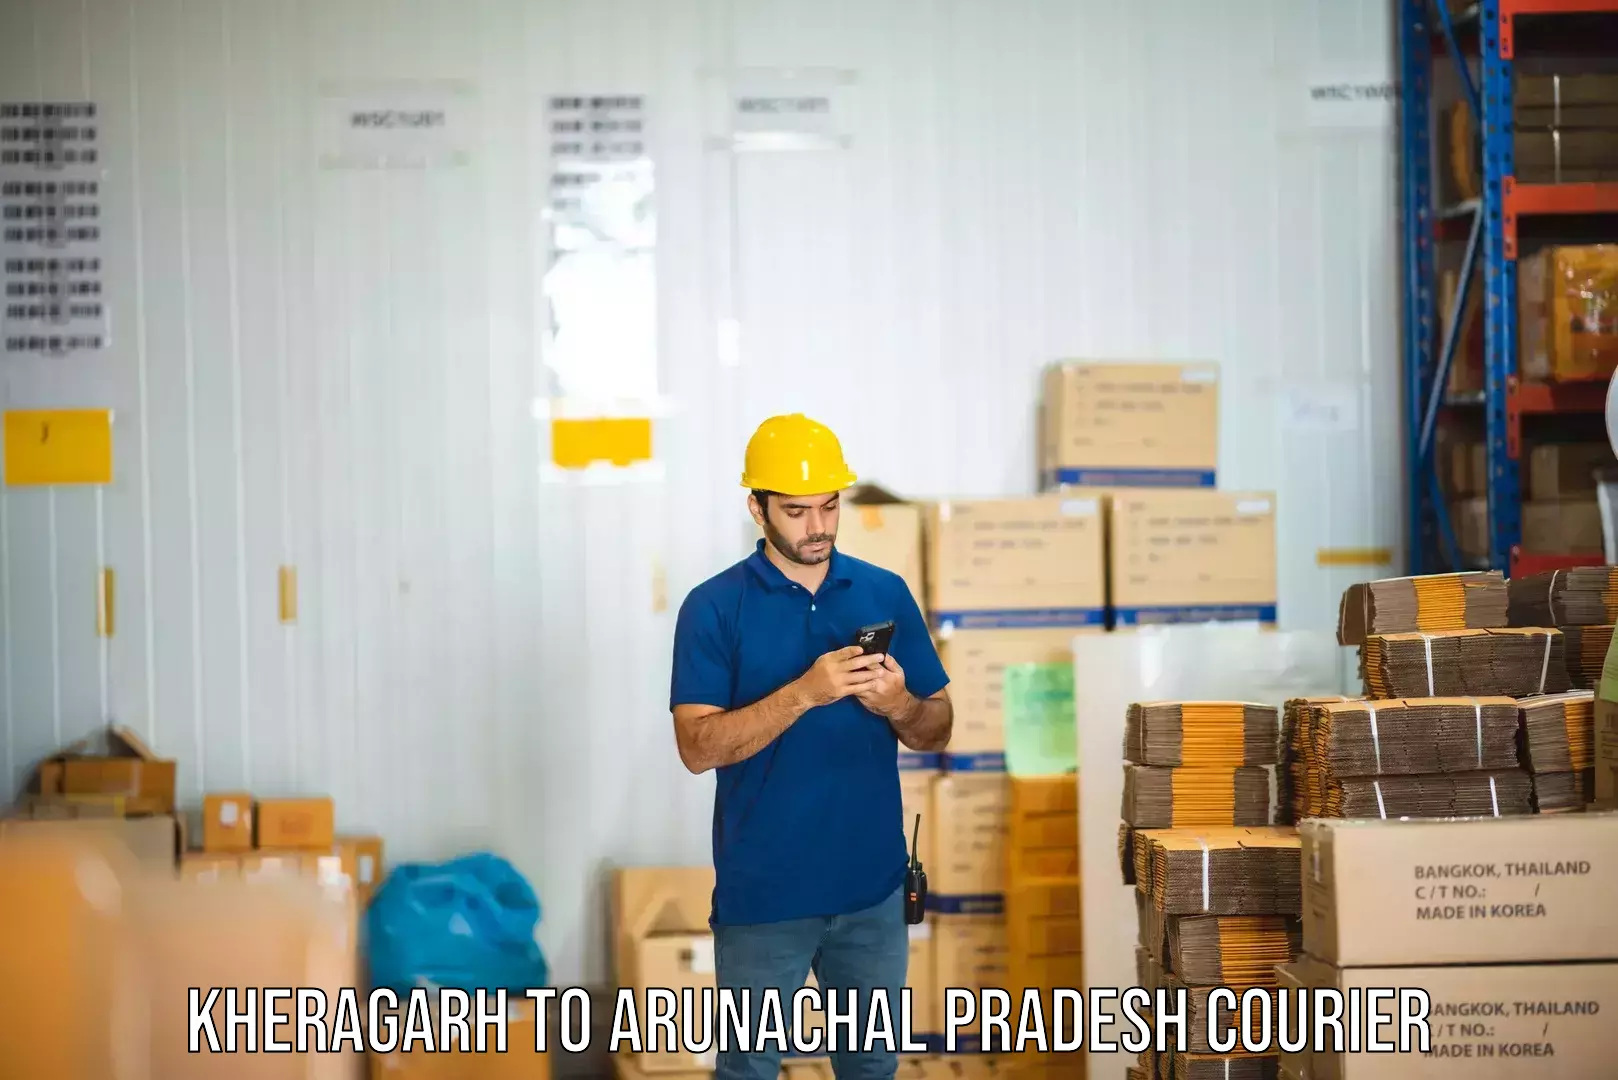 Professional courier handling Kheragarh to Sagalee